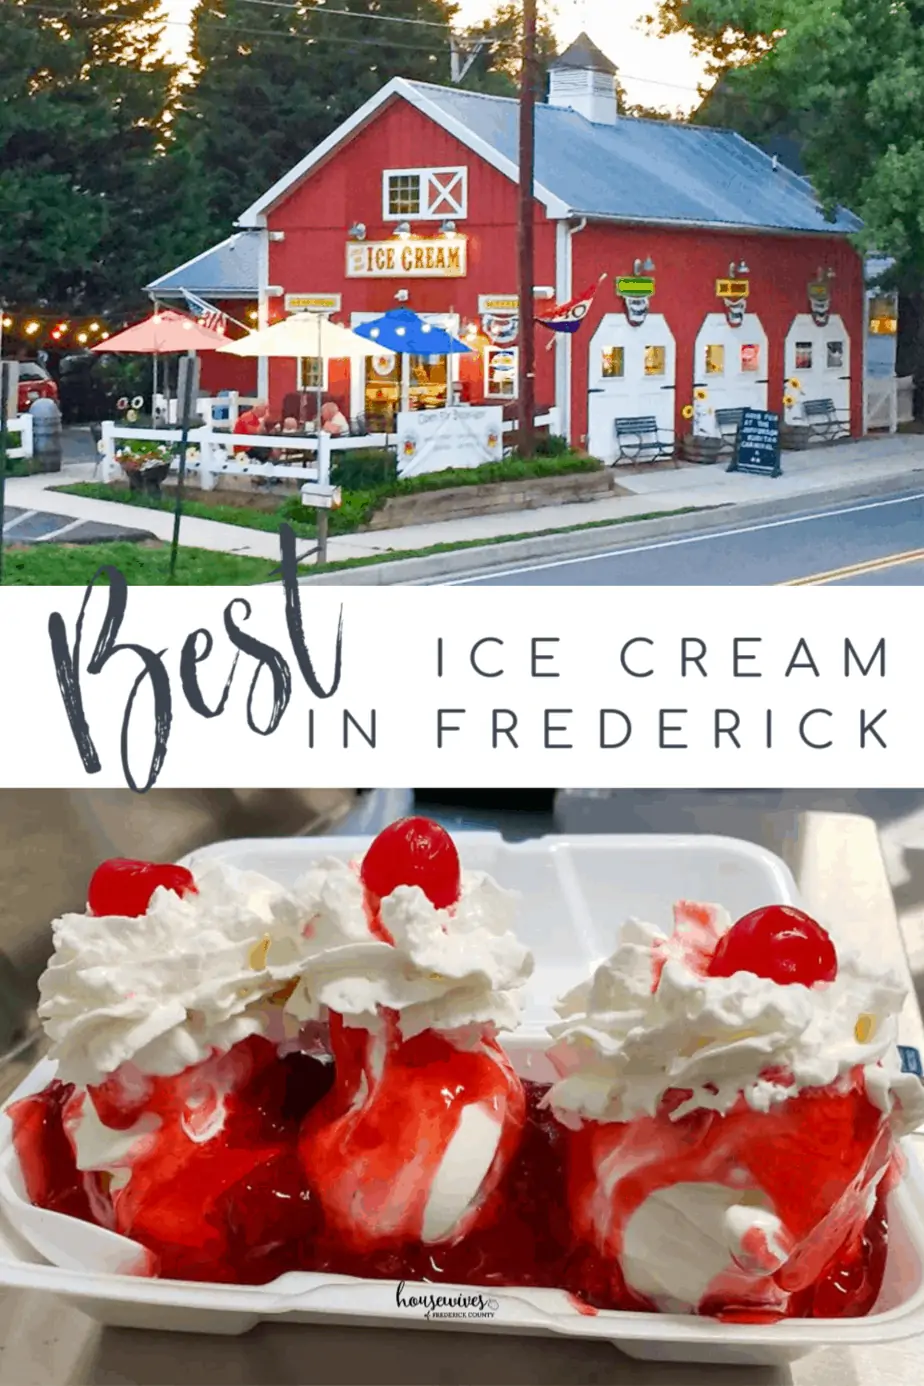 Best Ice Cream Frederick Maryland